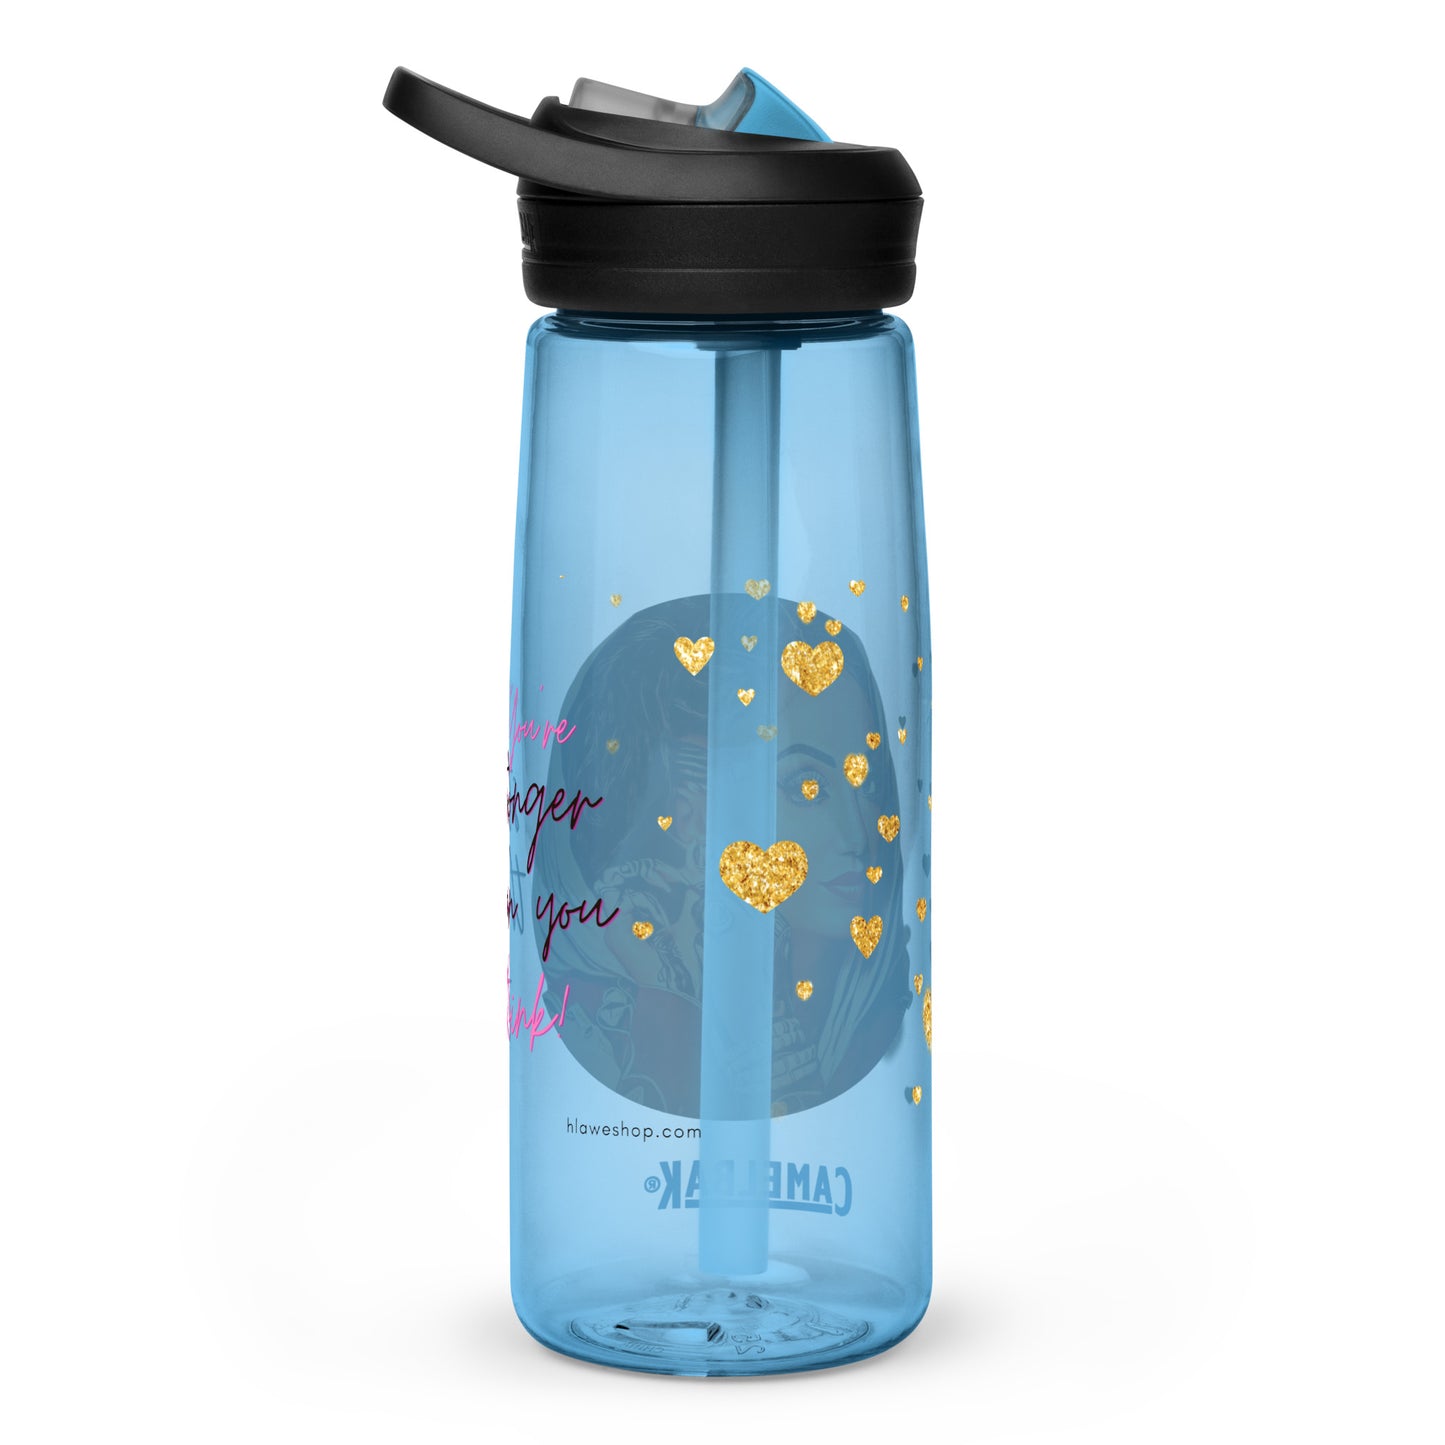 Habesha Sports water bottle